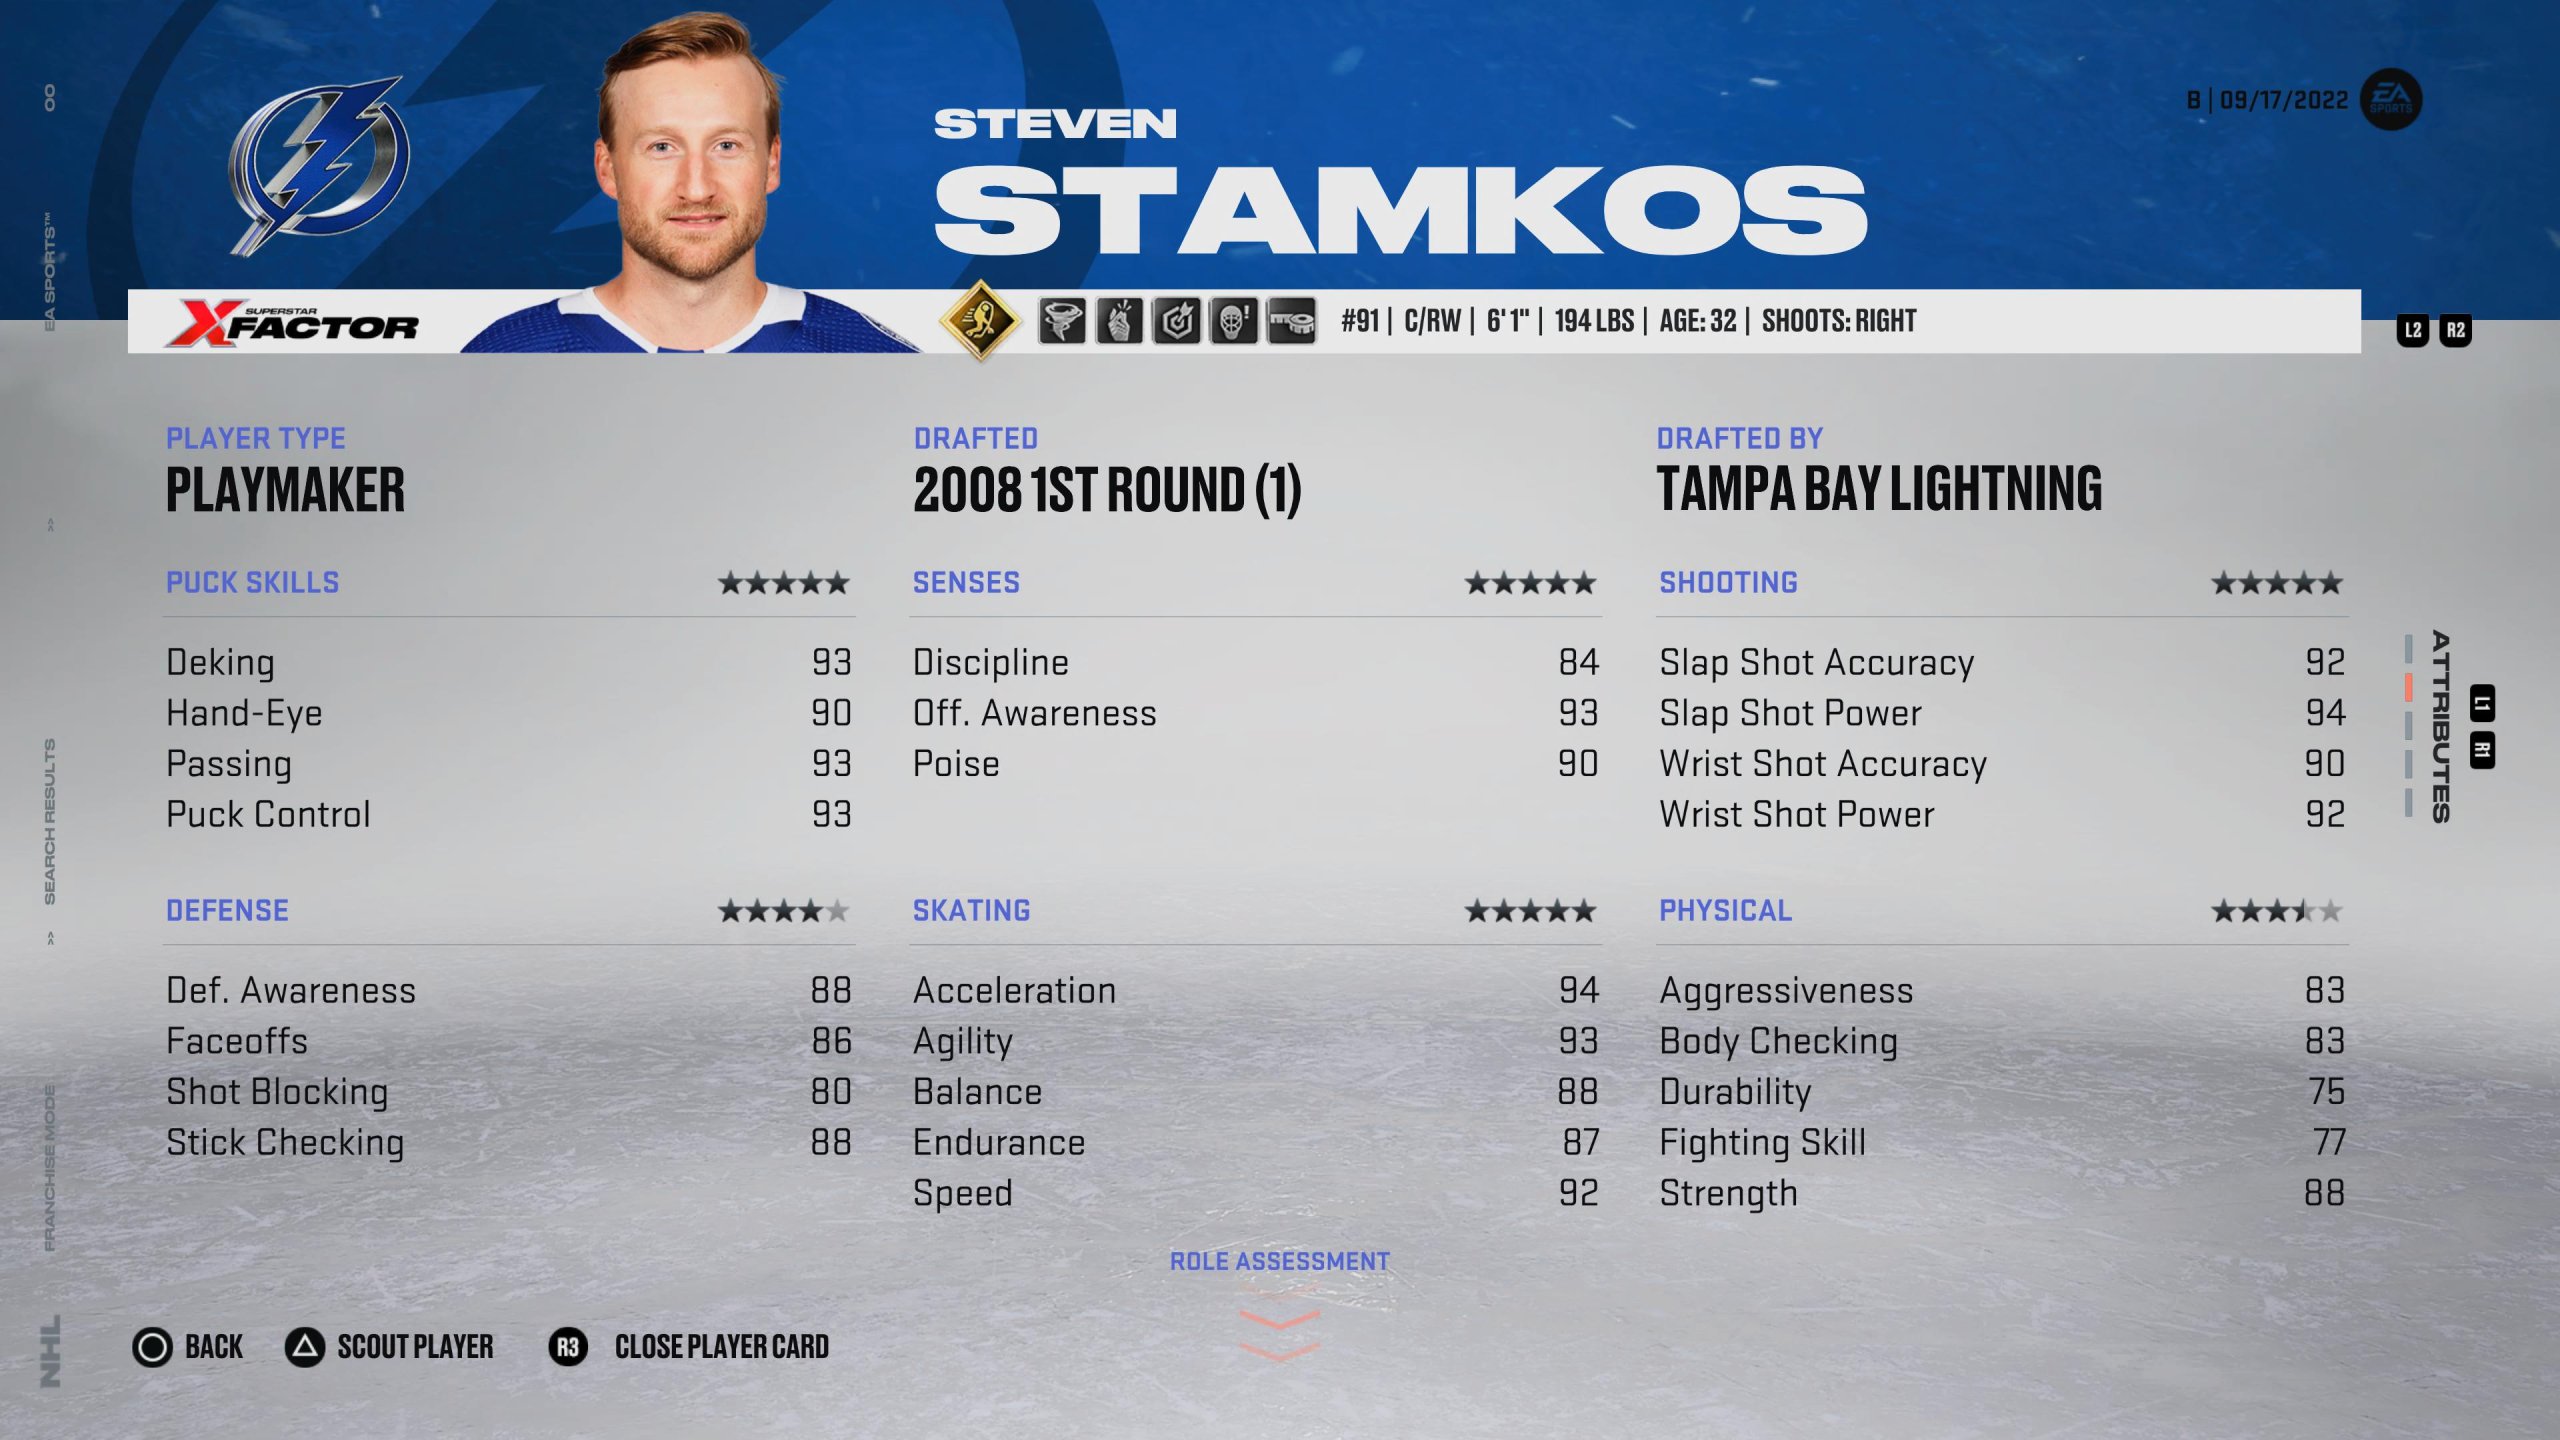 Steven Stamkos - NHL 23 で最高のセンターの 1 つ。